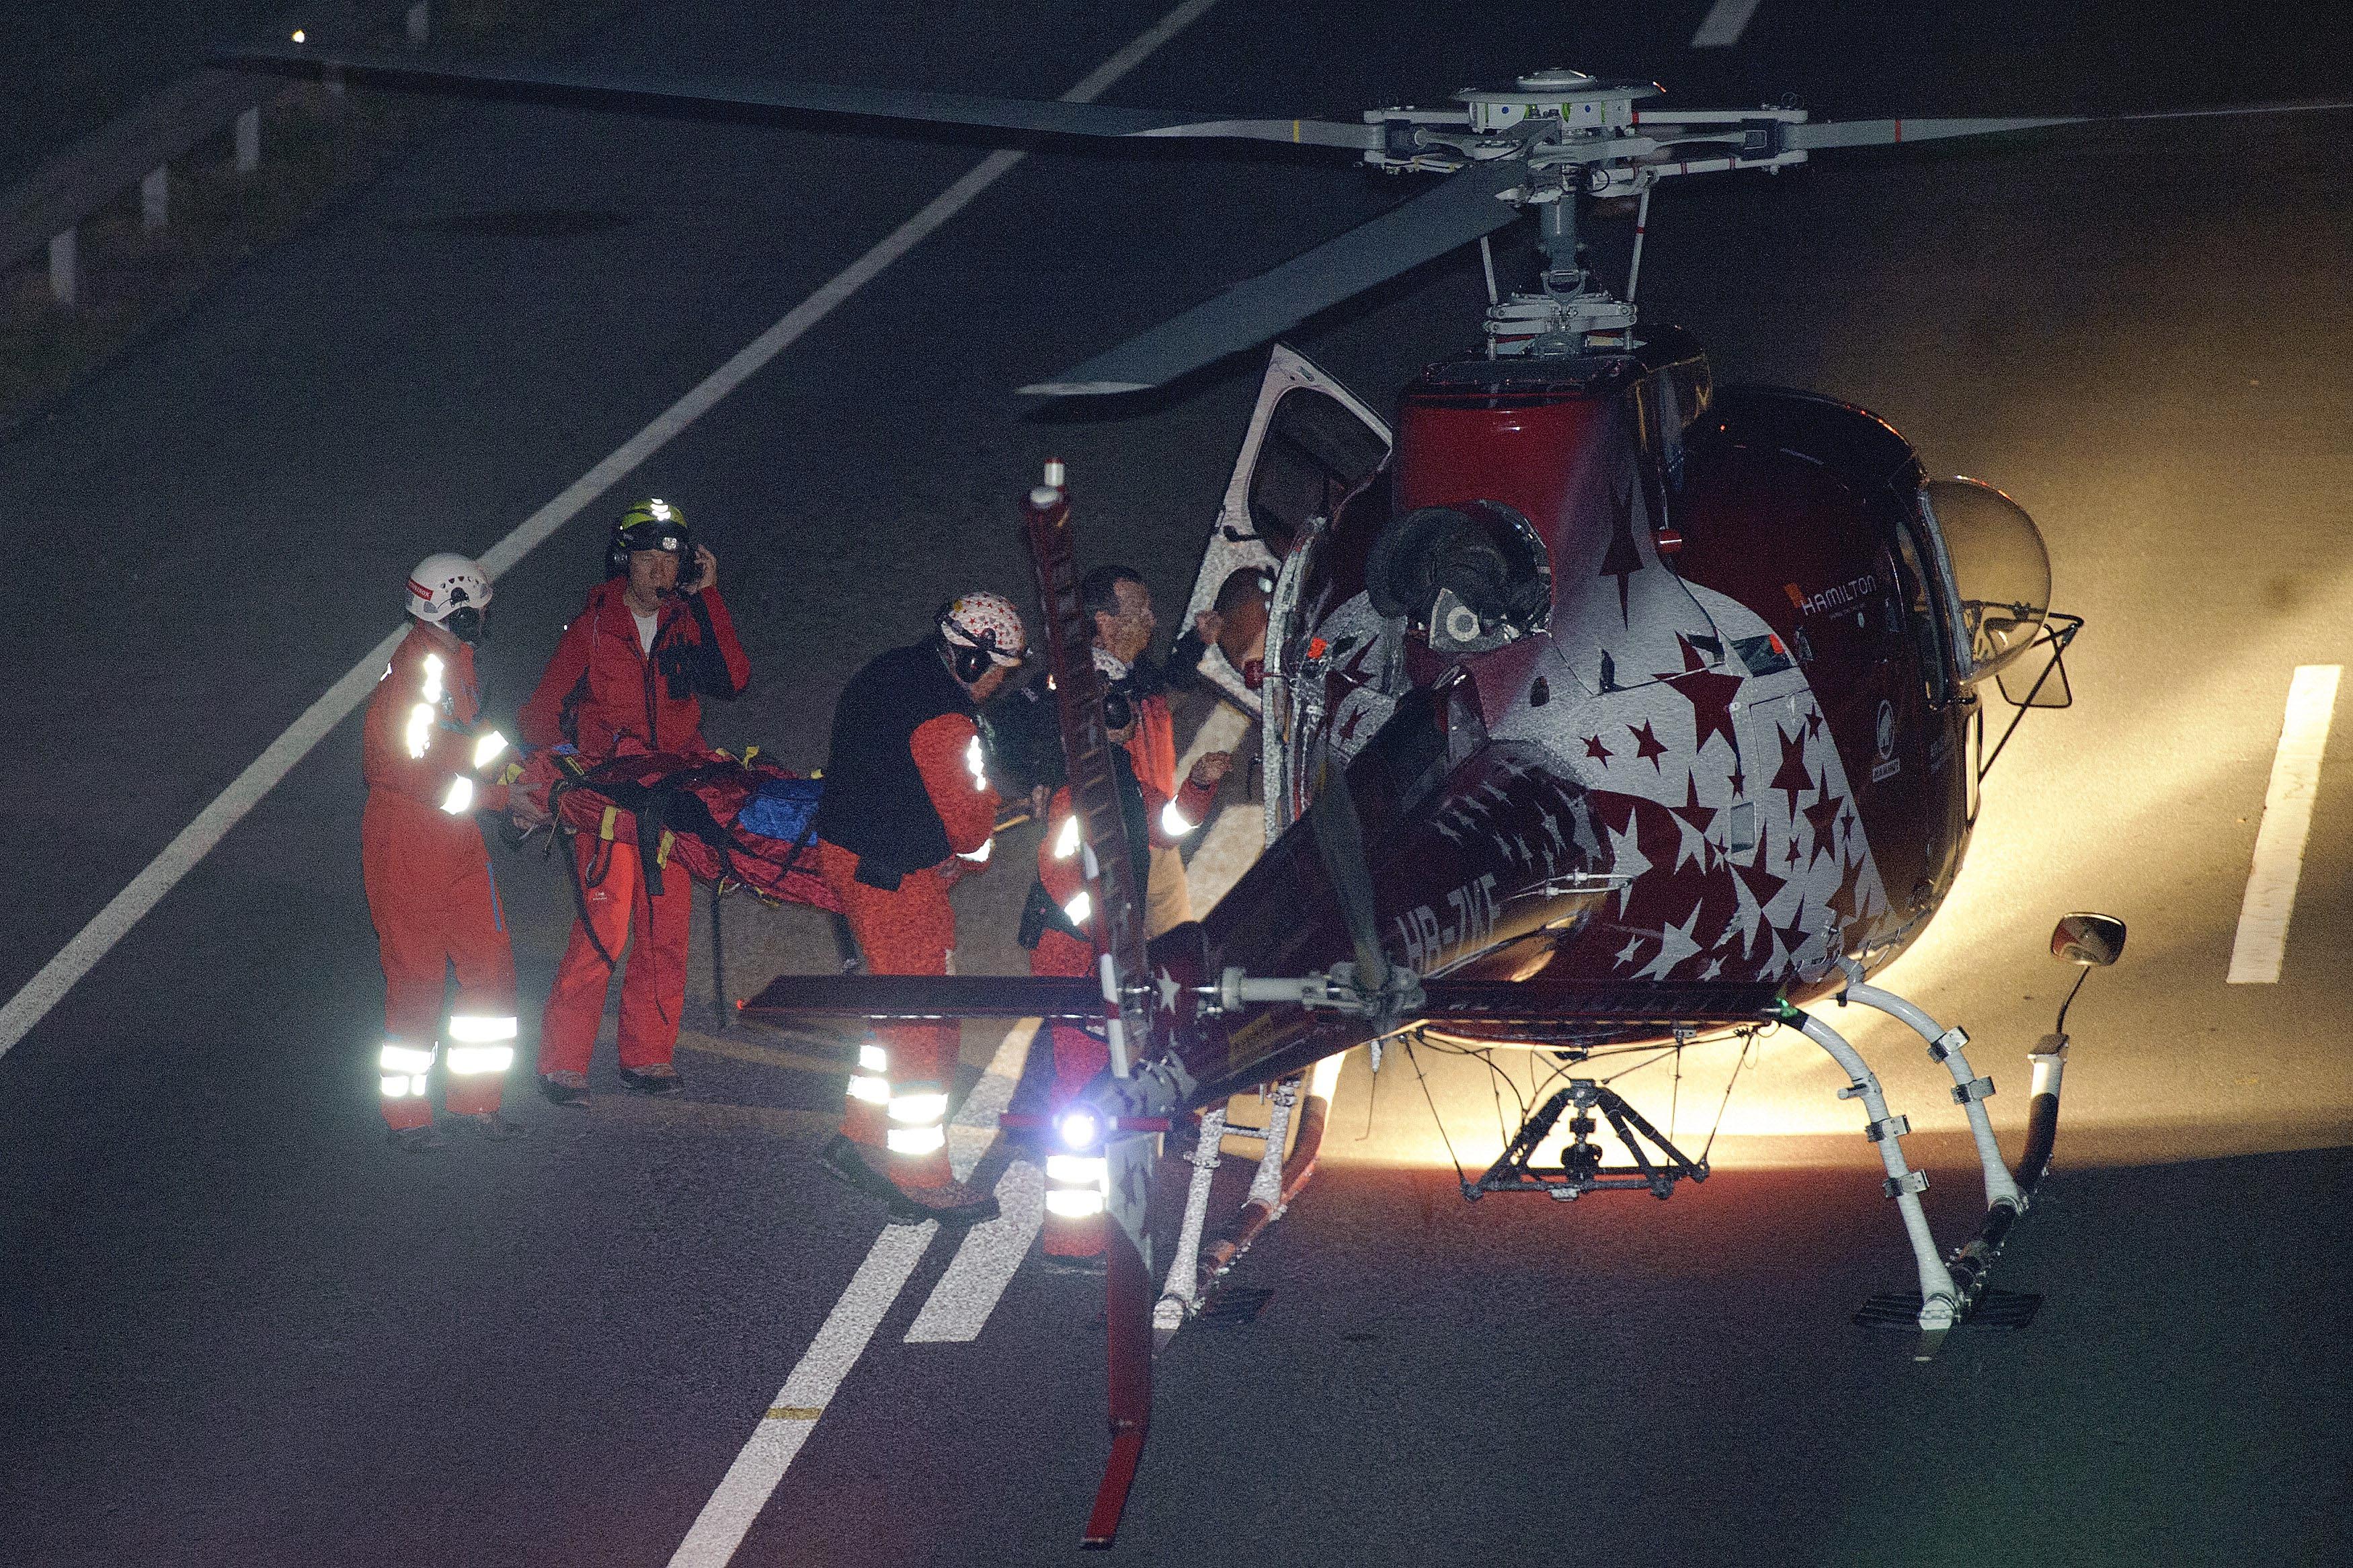 Ambulanshelikopter tog med sig skadade till fyra olika sjukhus.